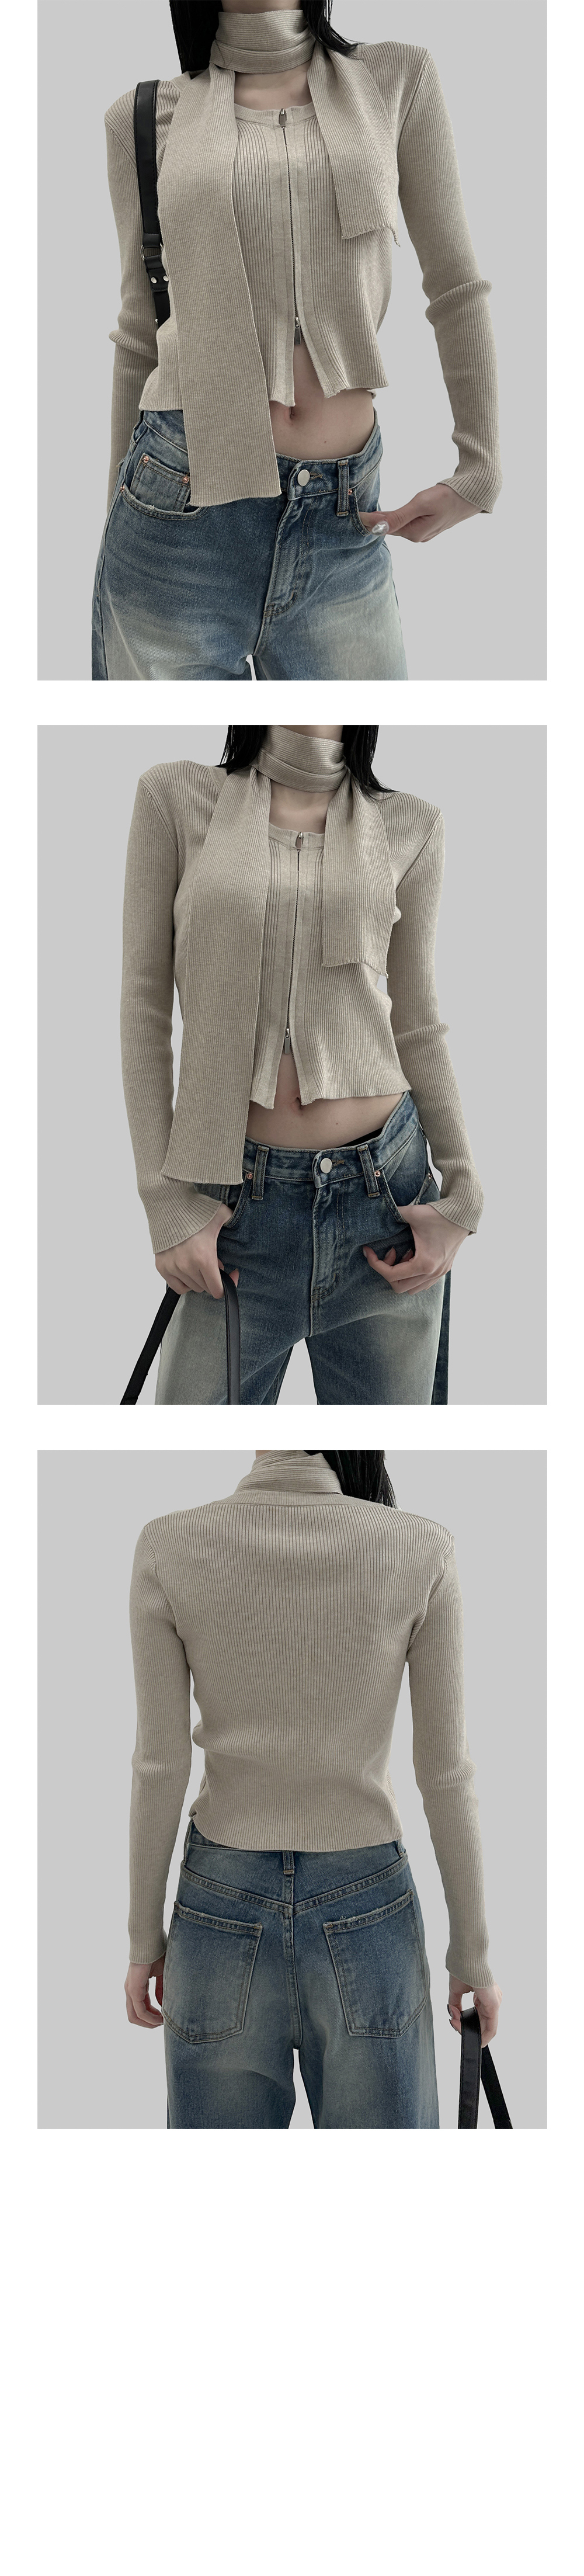 suspenders skirt/pants oatmeal color image-S1L15